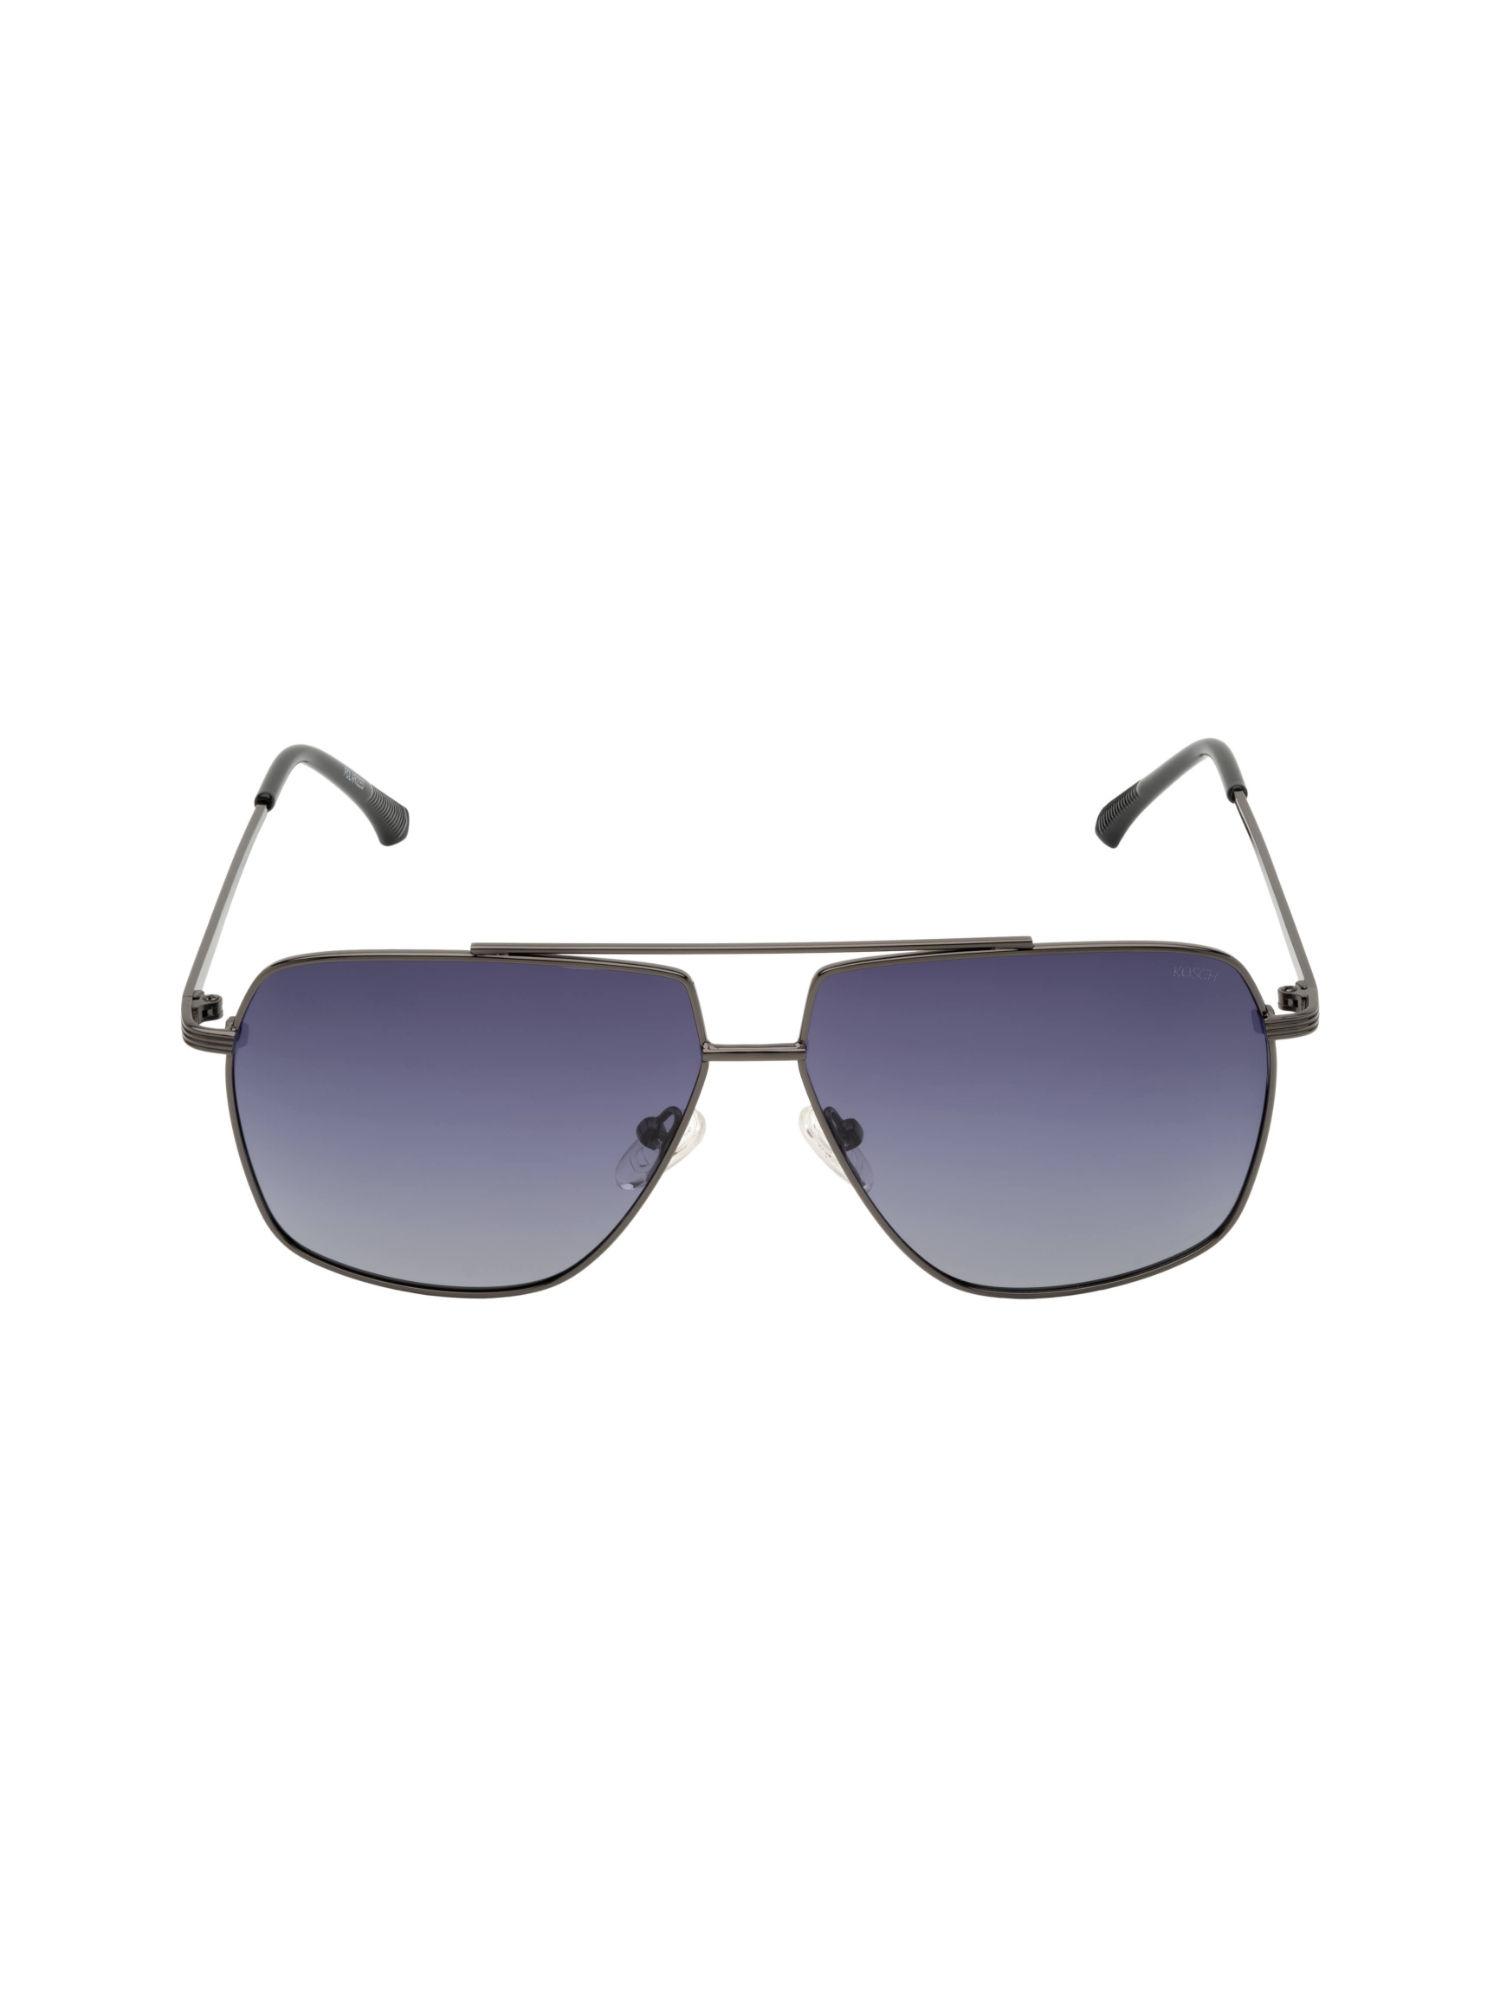 violet - rectangle shape sunglasses - kst 22822